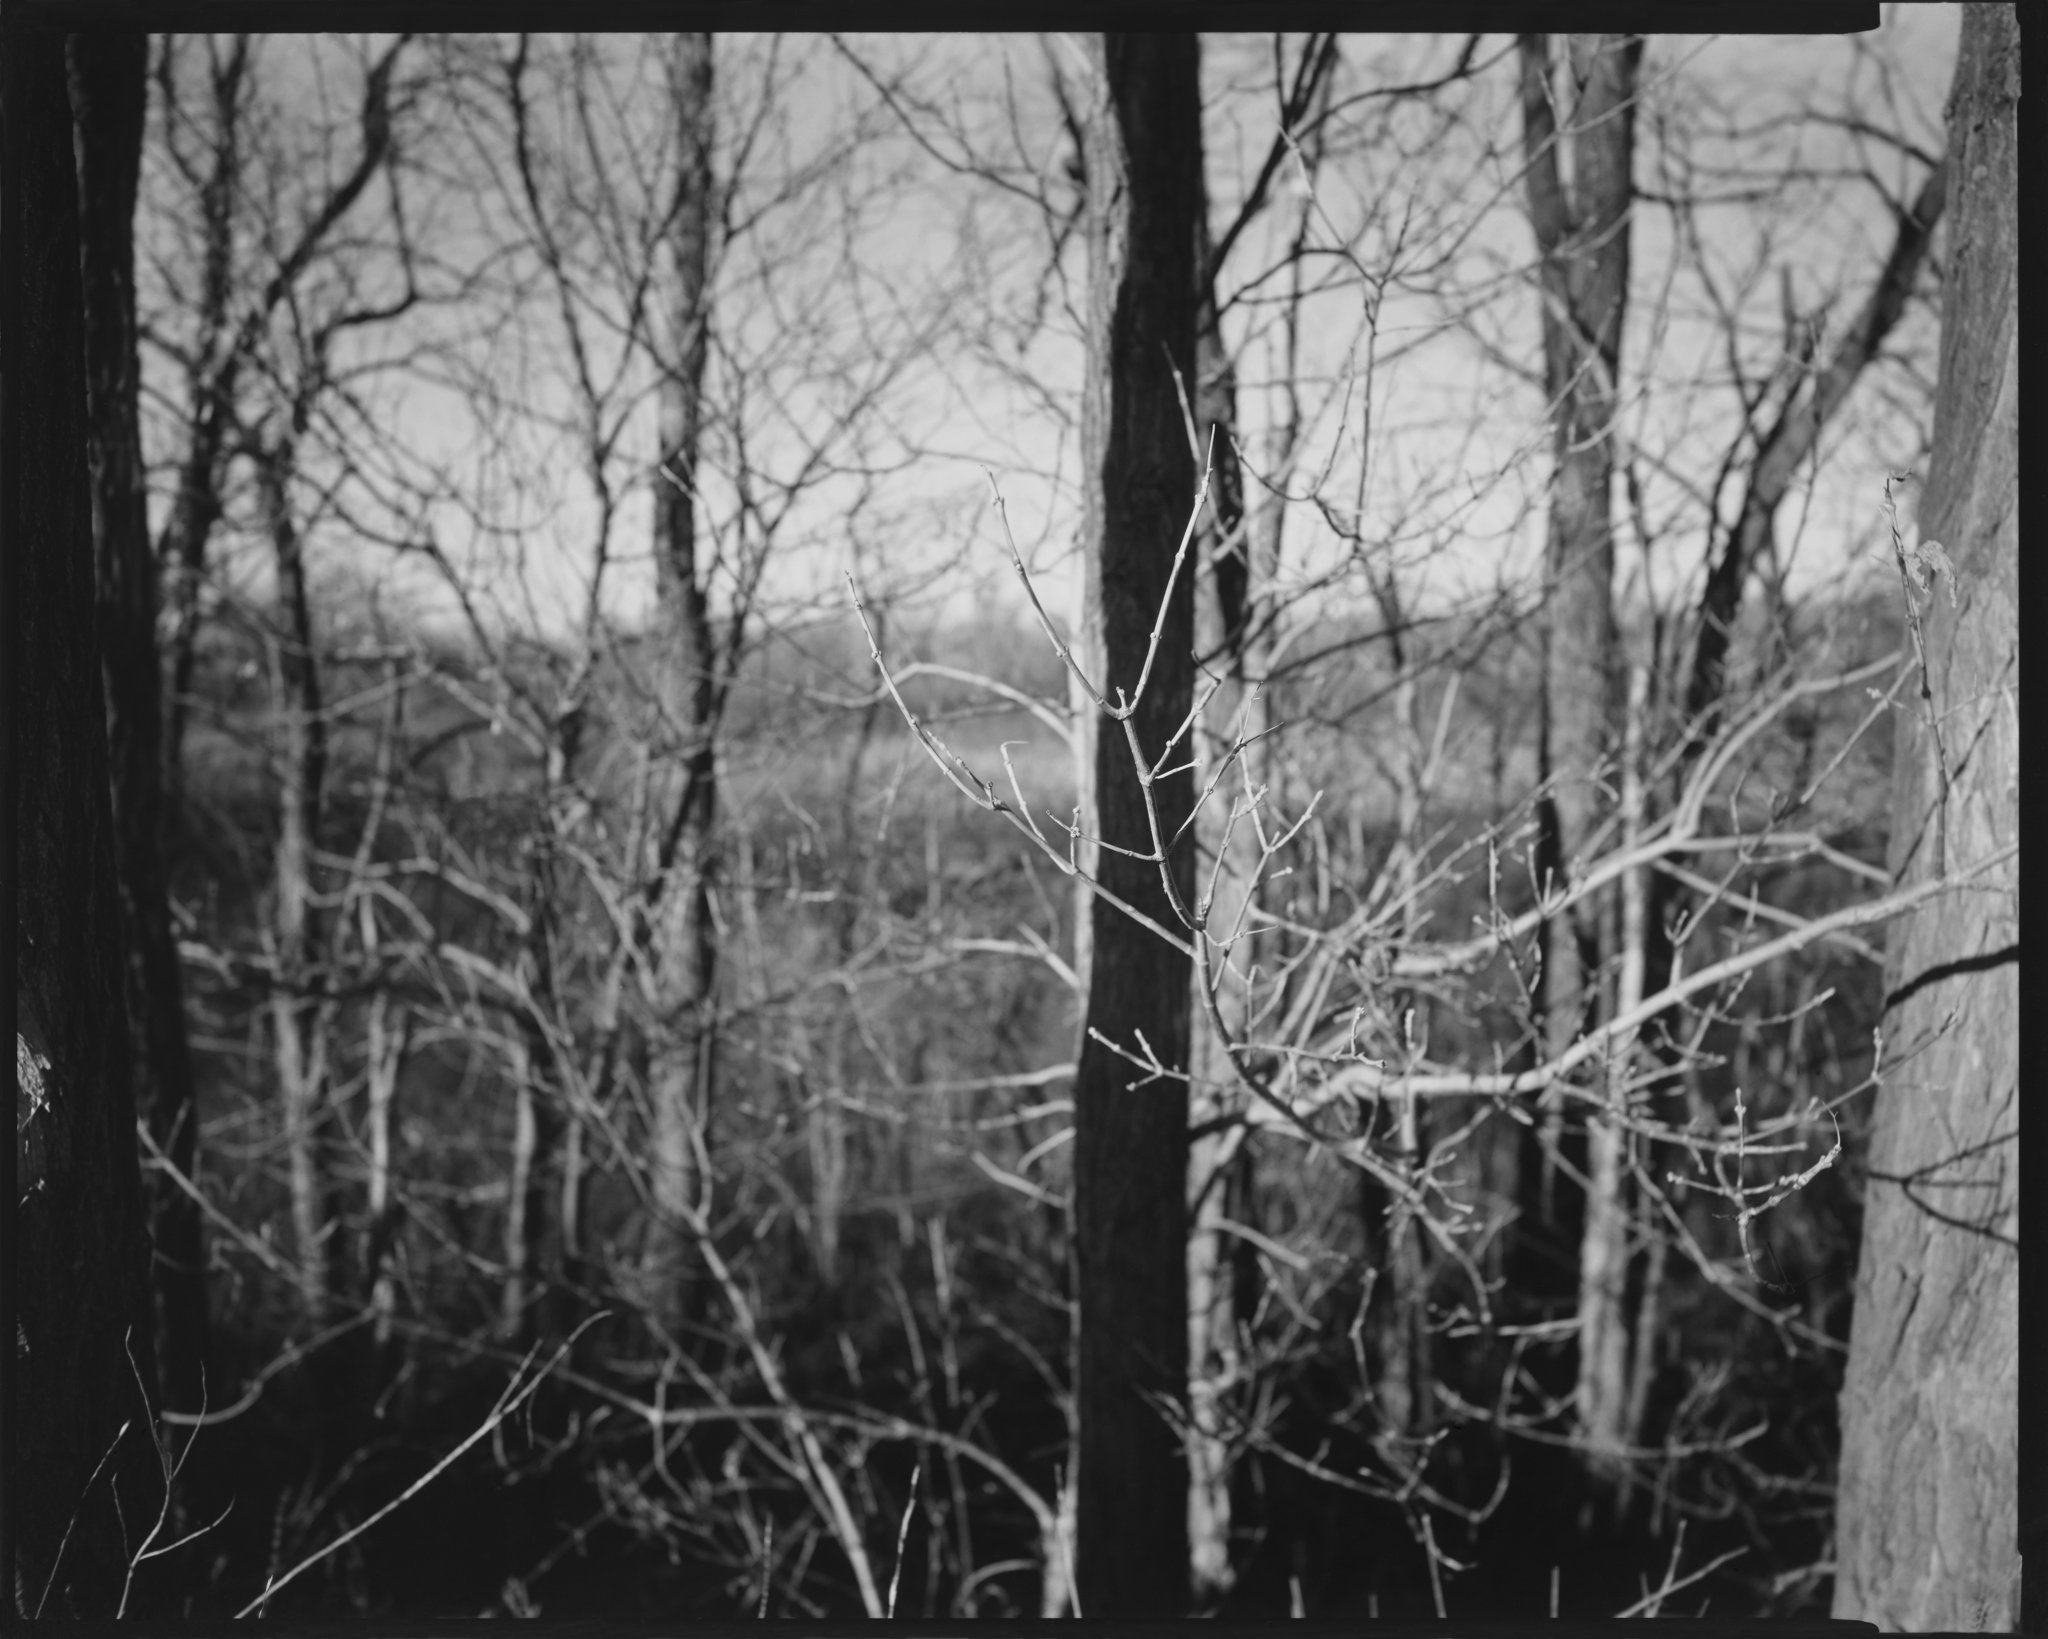 American Landscapes Portfolio_Shadow and Twig, Michigan_1979 © Nick Merrick.jpg